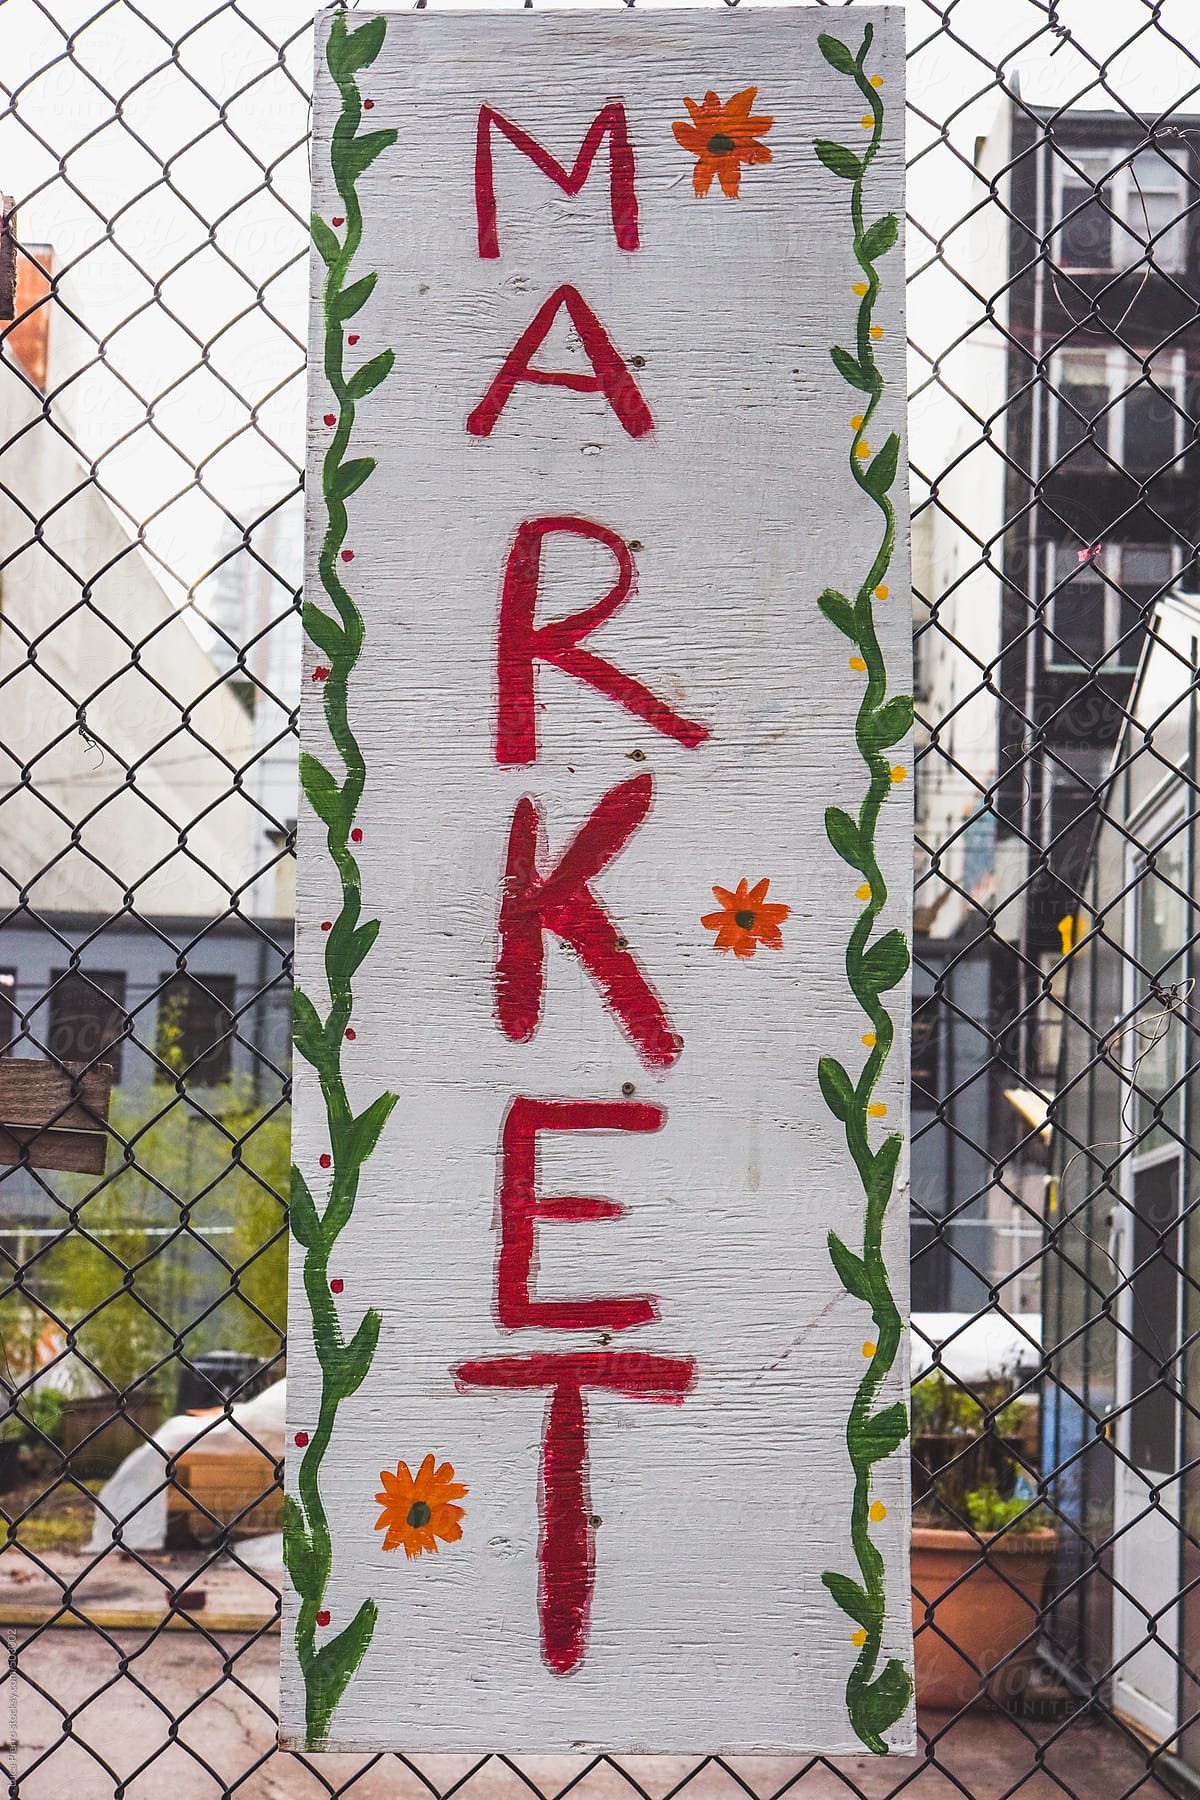 Handmade market sign